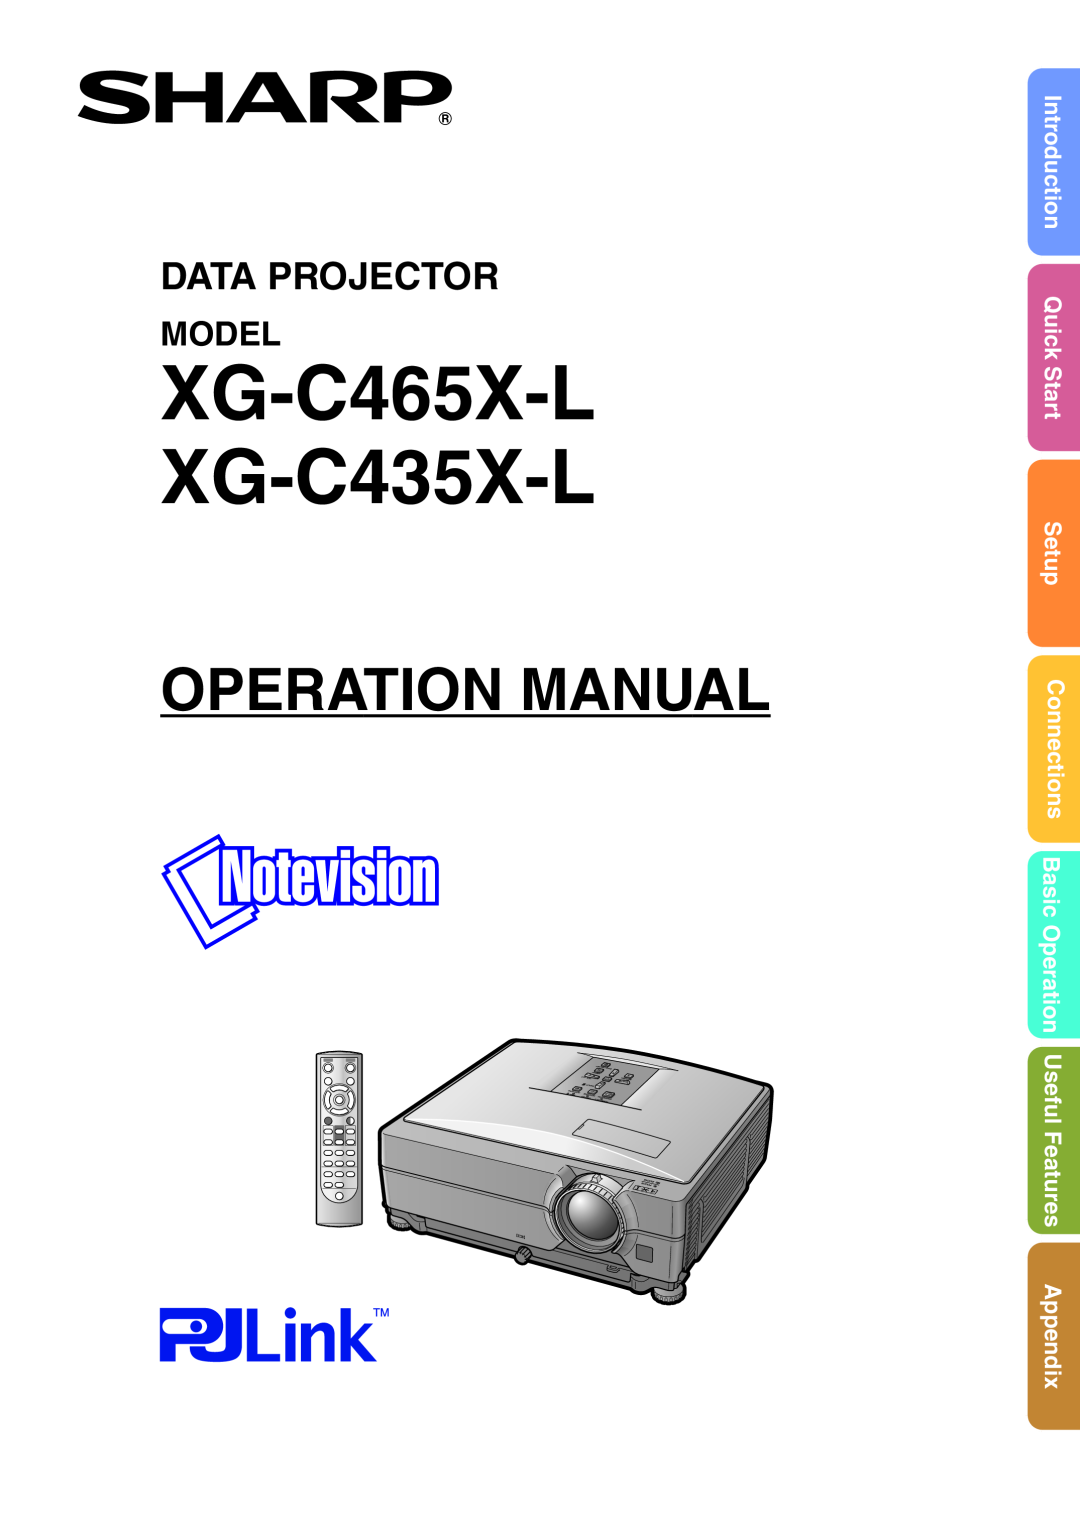 Sharp operation manual Model, Introduction Quick Start Setup Connections Basic Operation, XG-C465X-L XG-C435X-L 